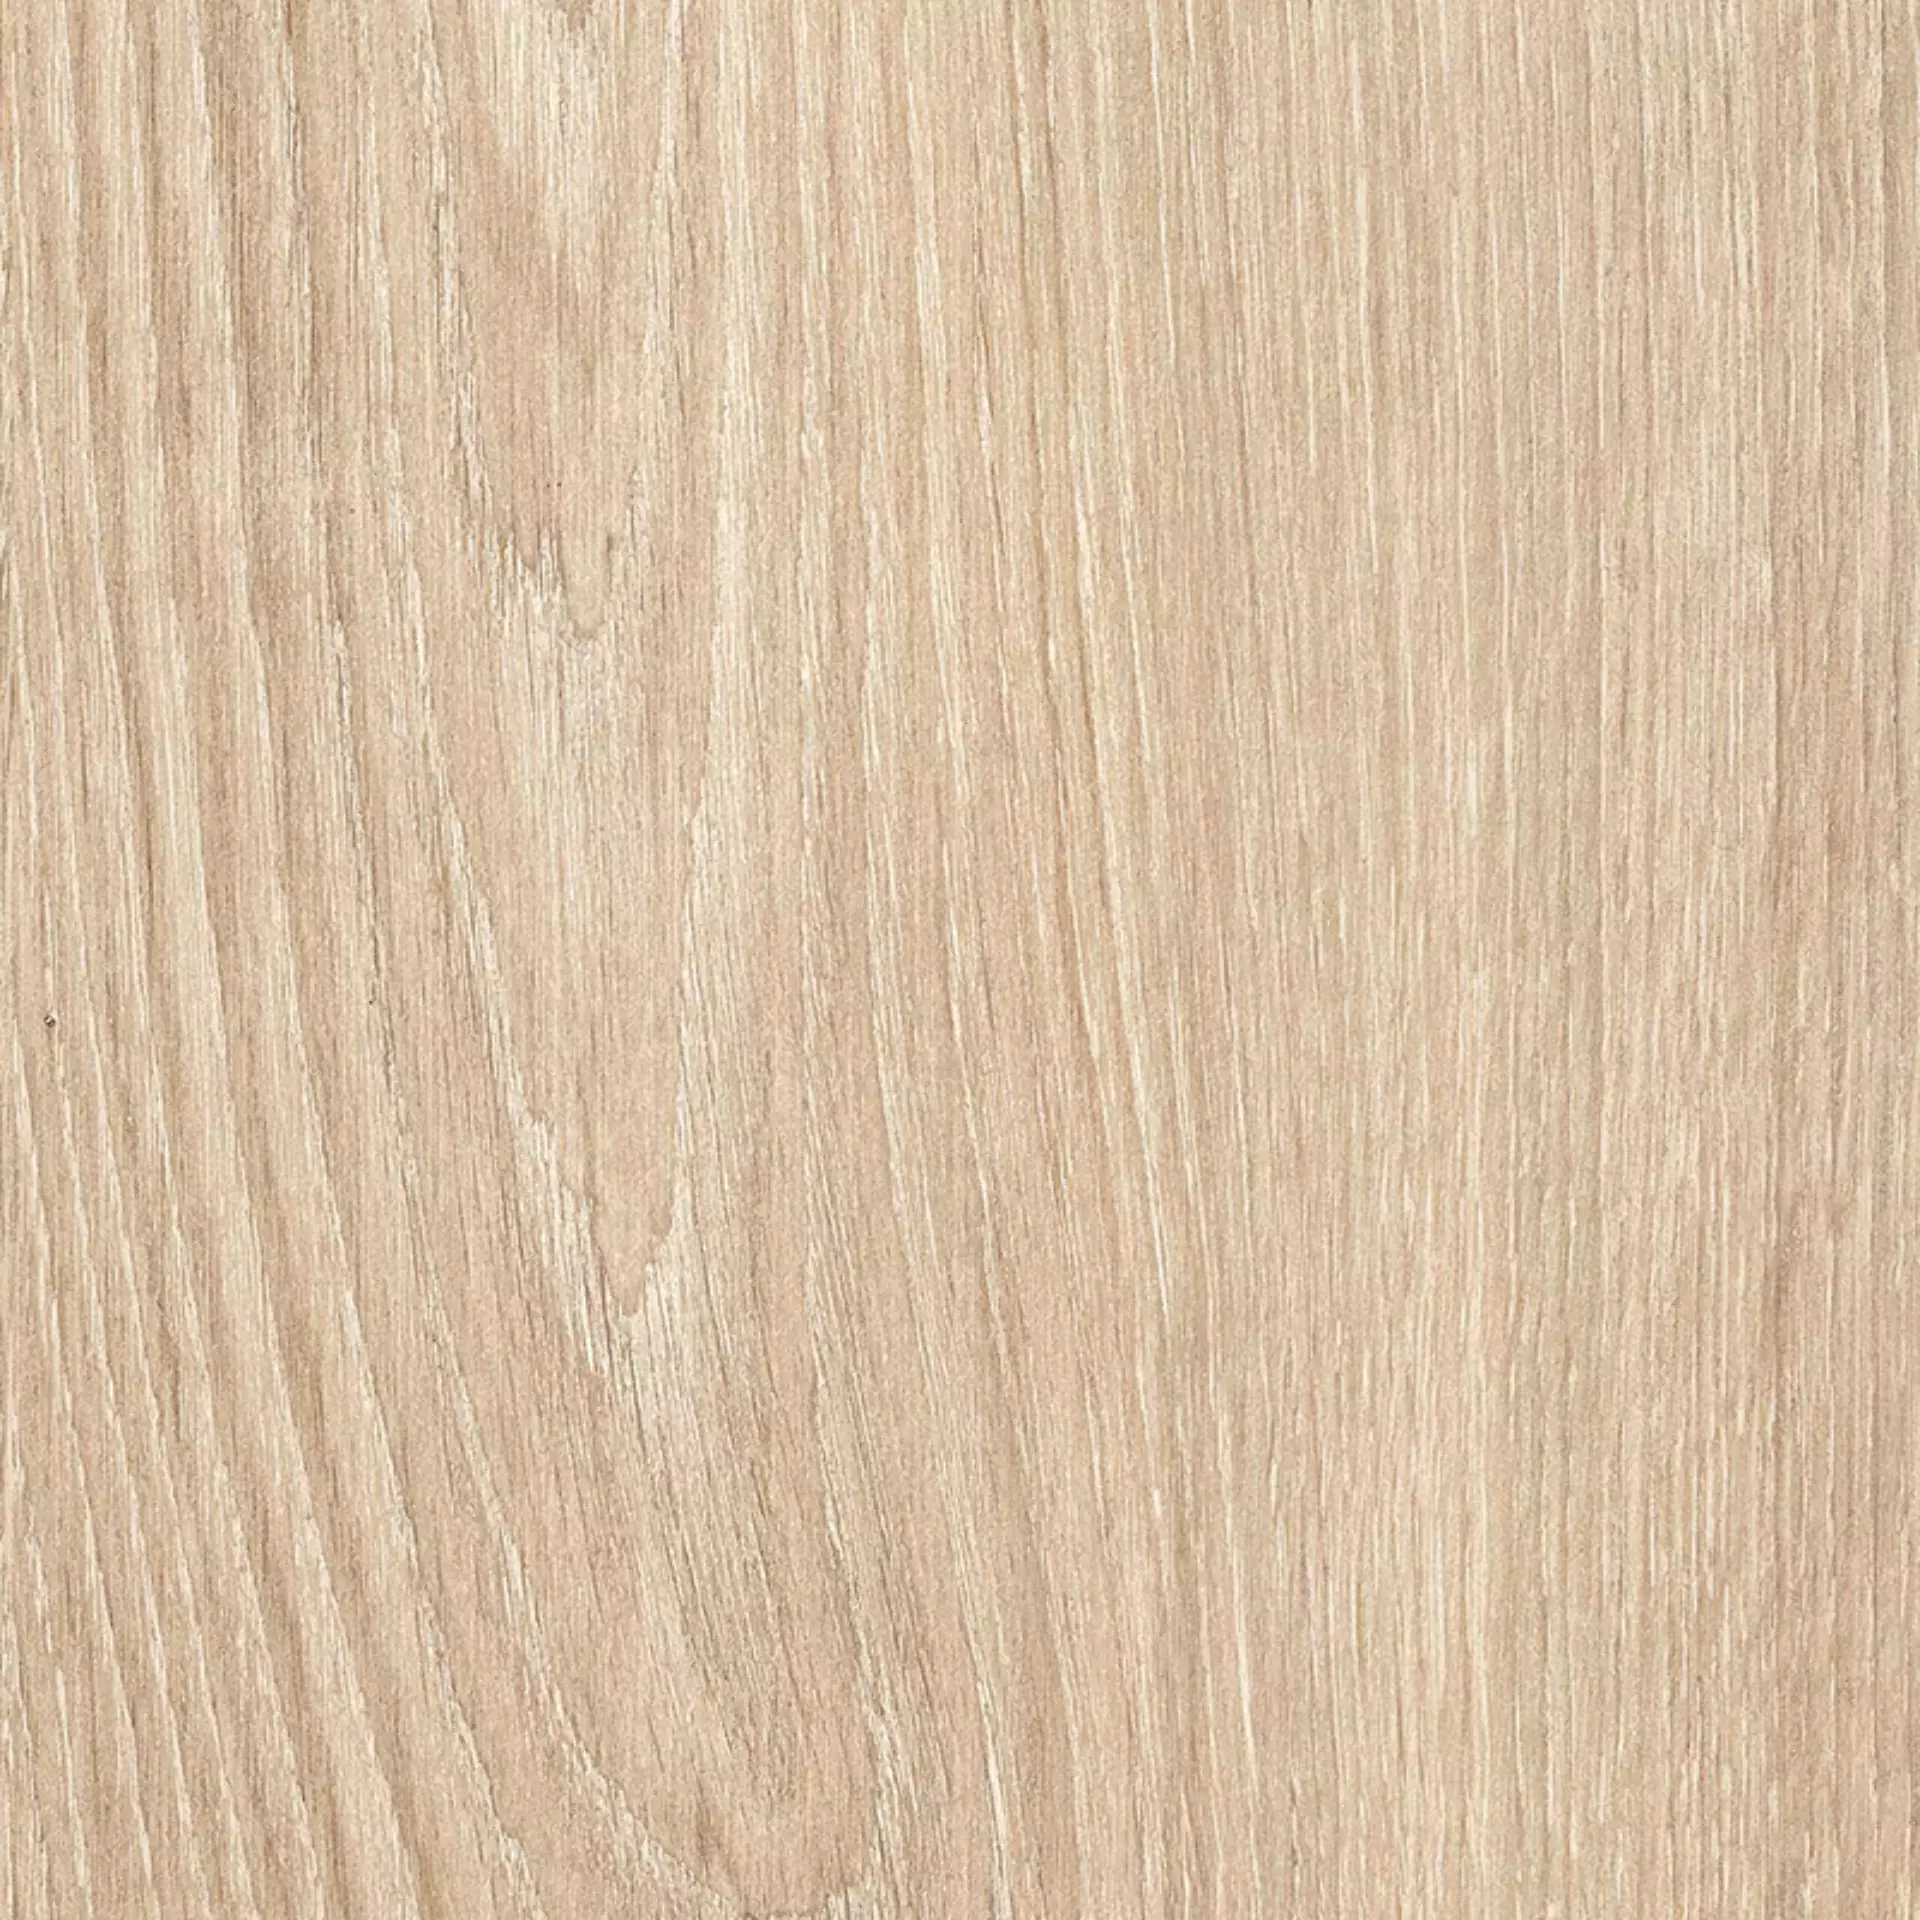 Casalgrande Englishwood Snowdonia Naturale – Matt 16100004 20x120cm rectified 9mm